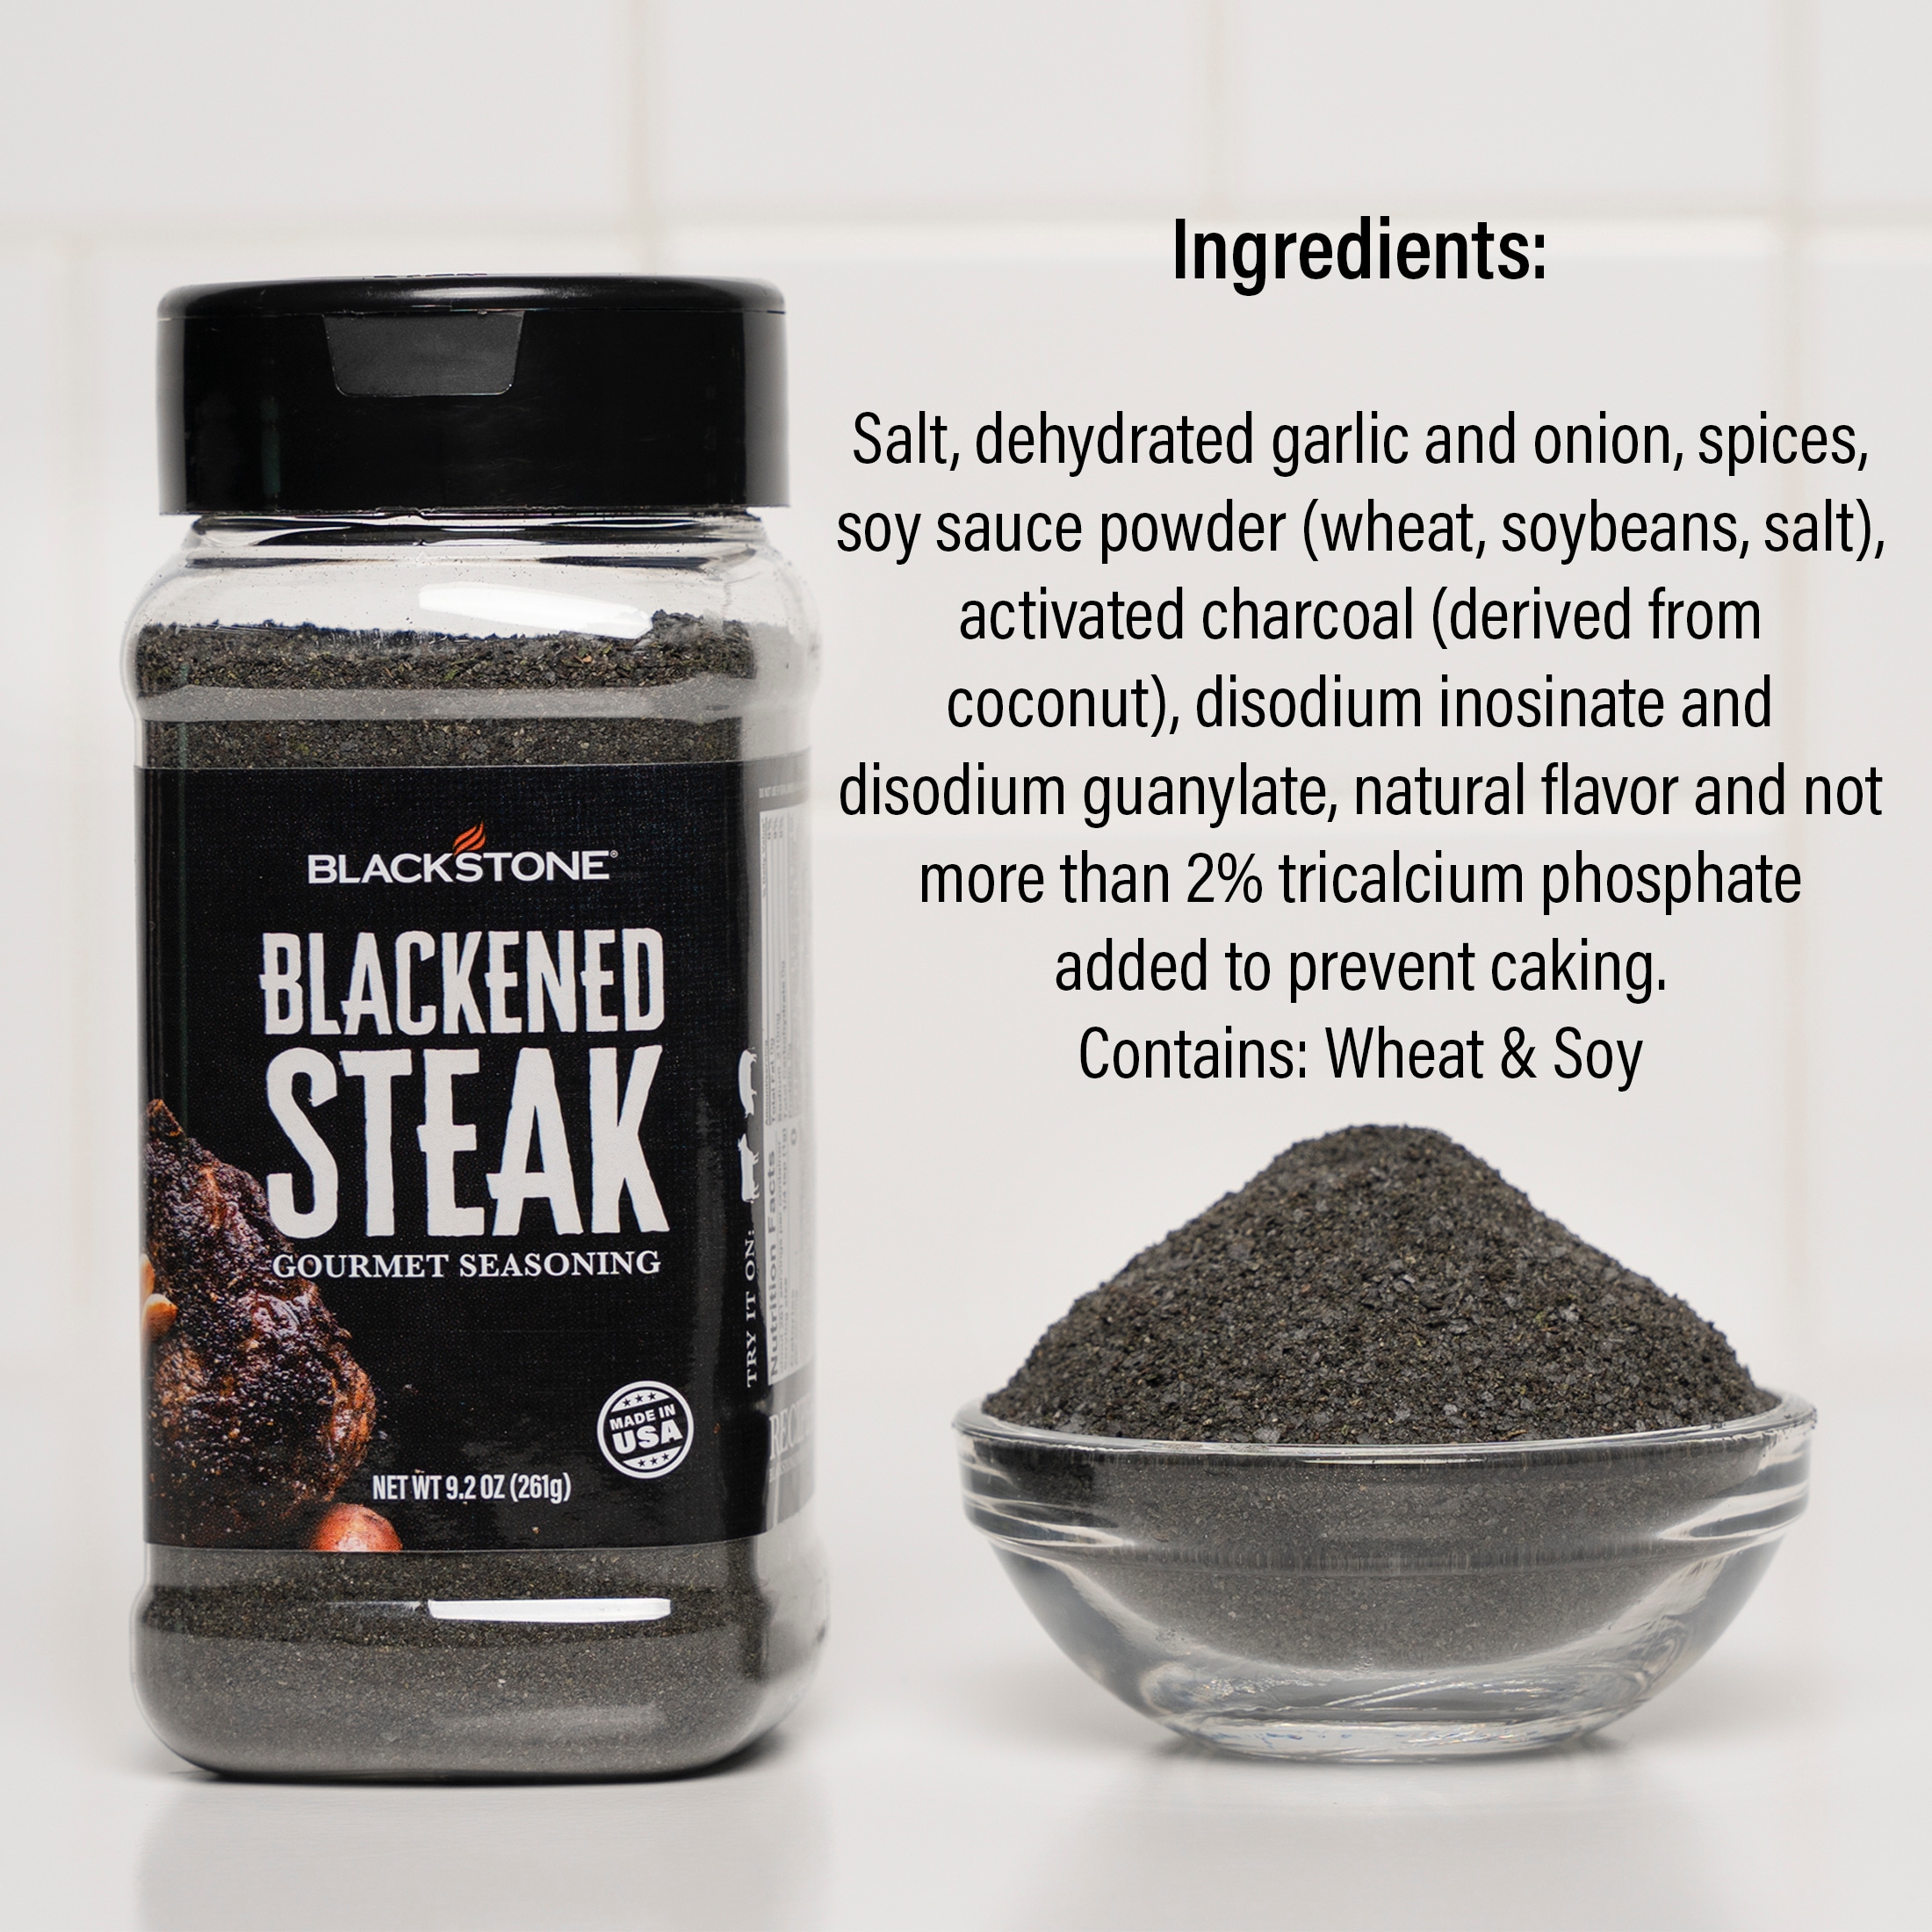 Blackstone All Purpose Seasoning 7.3 oz